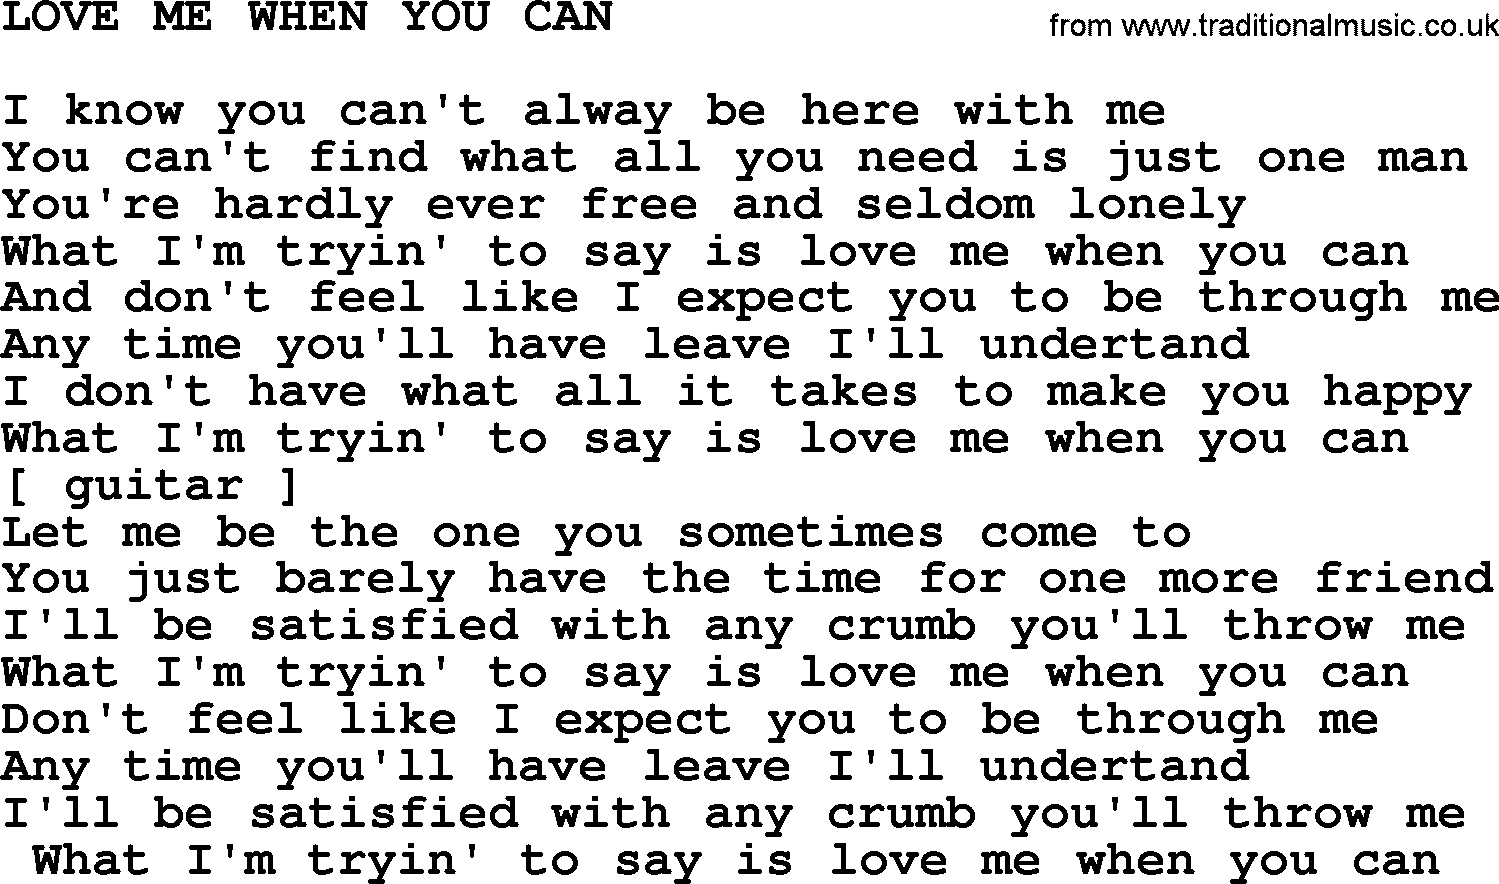 Merle Haggard song: Love Me When You Can, lyrics.